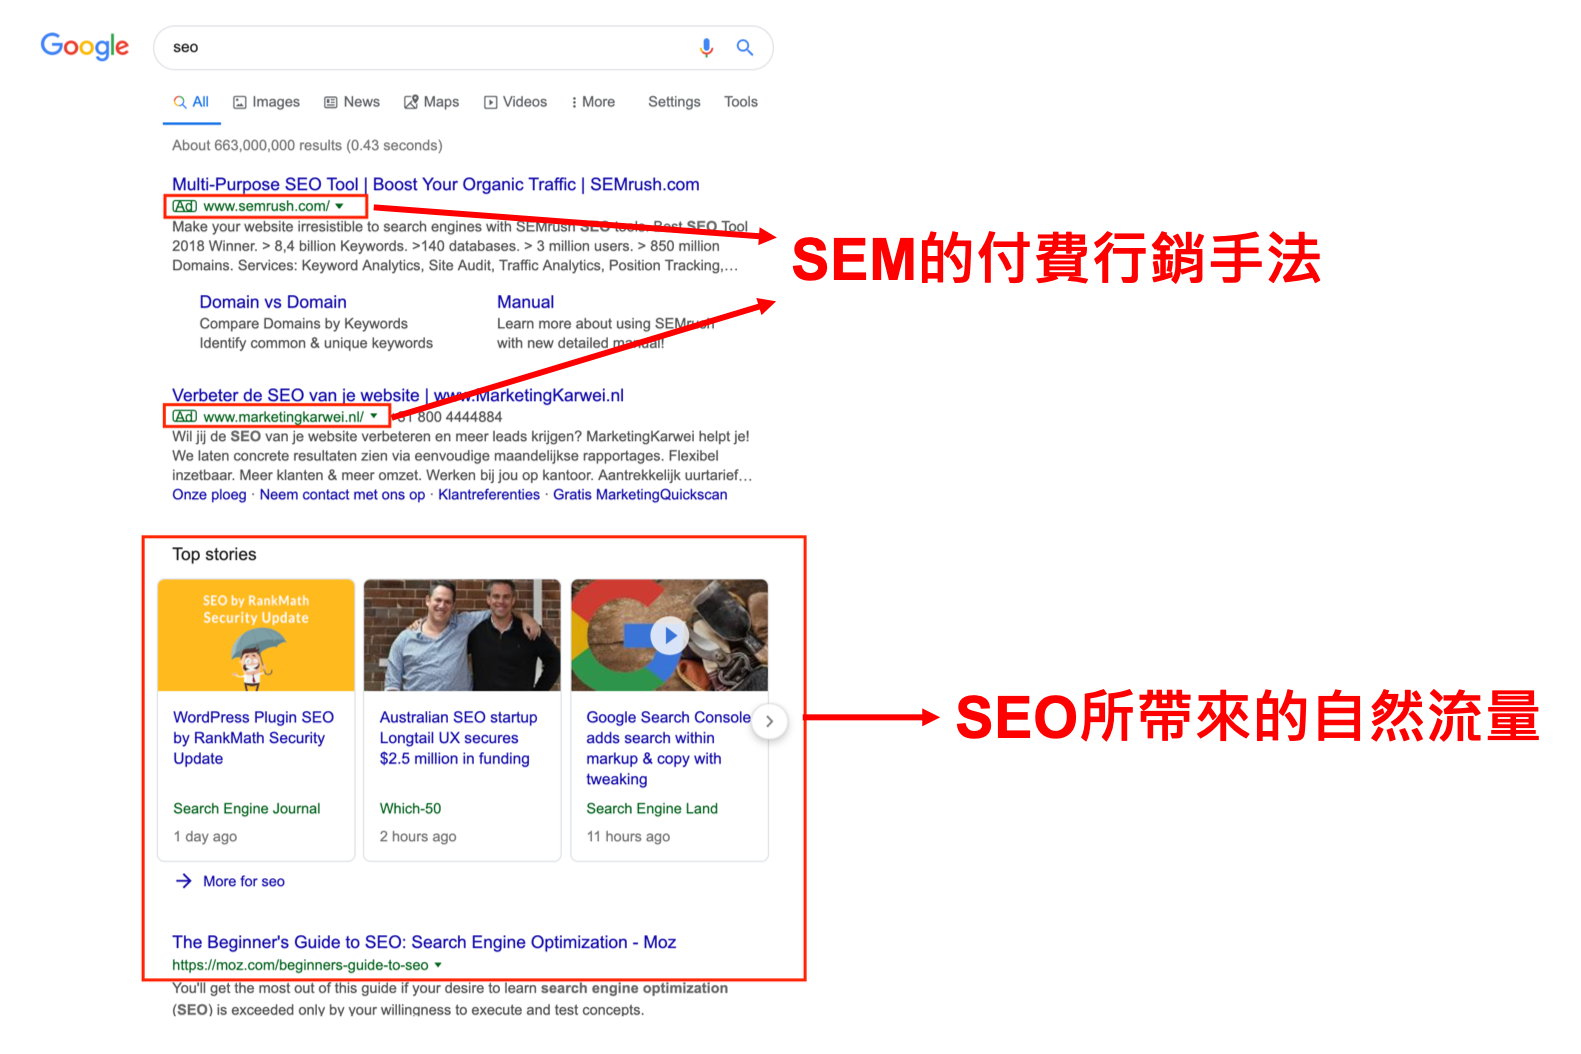 seo sem在google上的差別